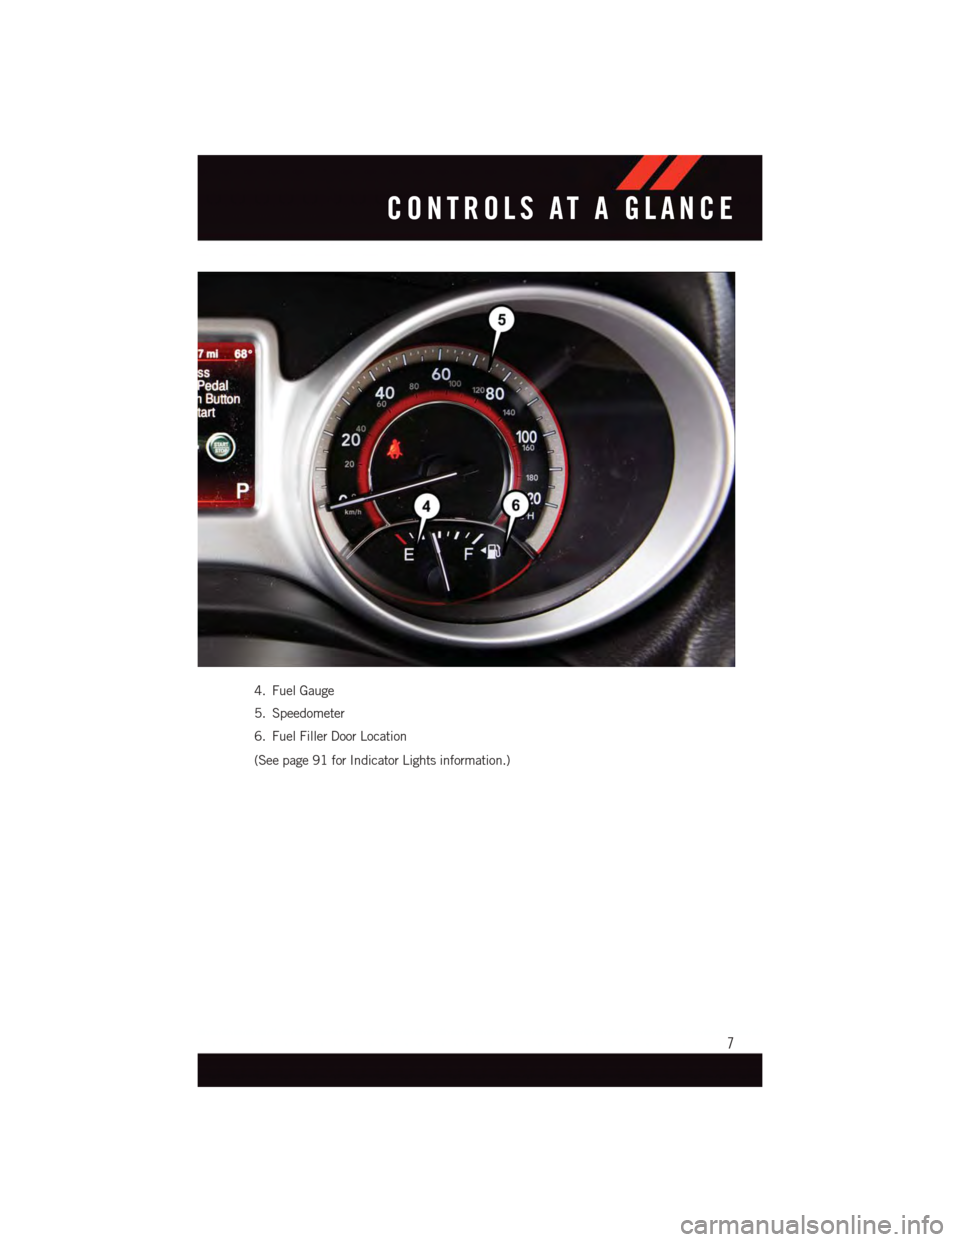 DODGE JOURNEY 2015 1.G User Guide 4. Fuel Gauge
5. Speedometer
6. Fuel Filler Door Location
(See page 91 for Indicator Lights information.)
CONTROLS AT A GLANCE
7 